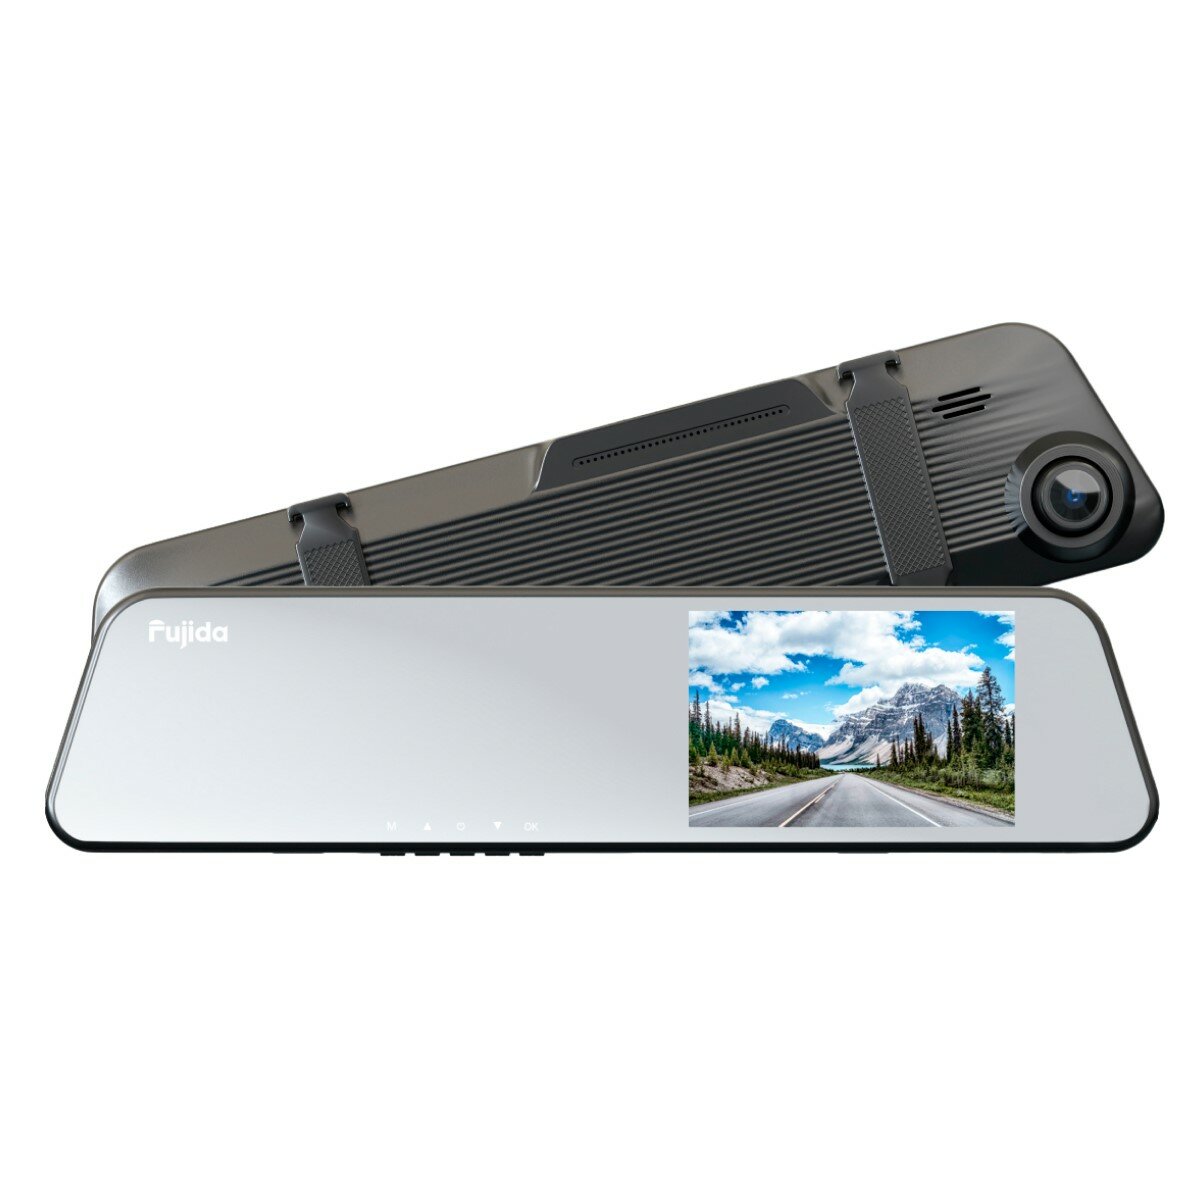 Видеорегистратор-зеркало для автомобиля Fujida Zoom Blik Full HD с функцией парковки